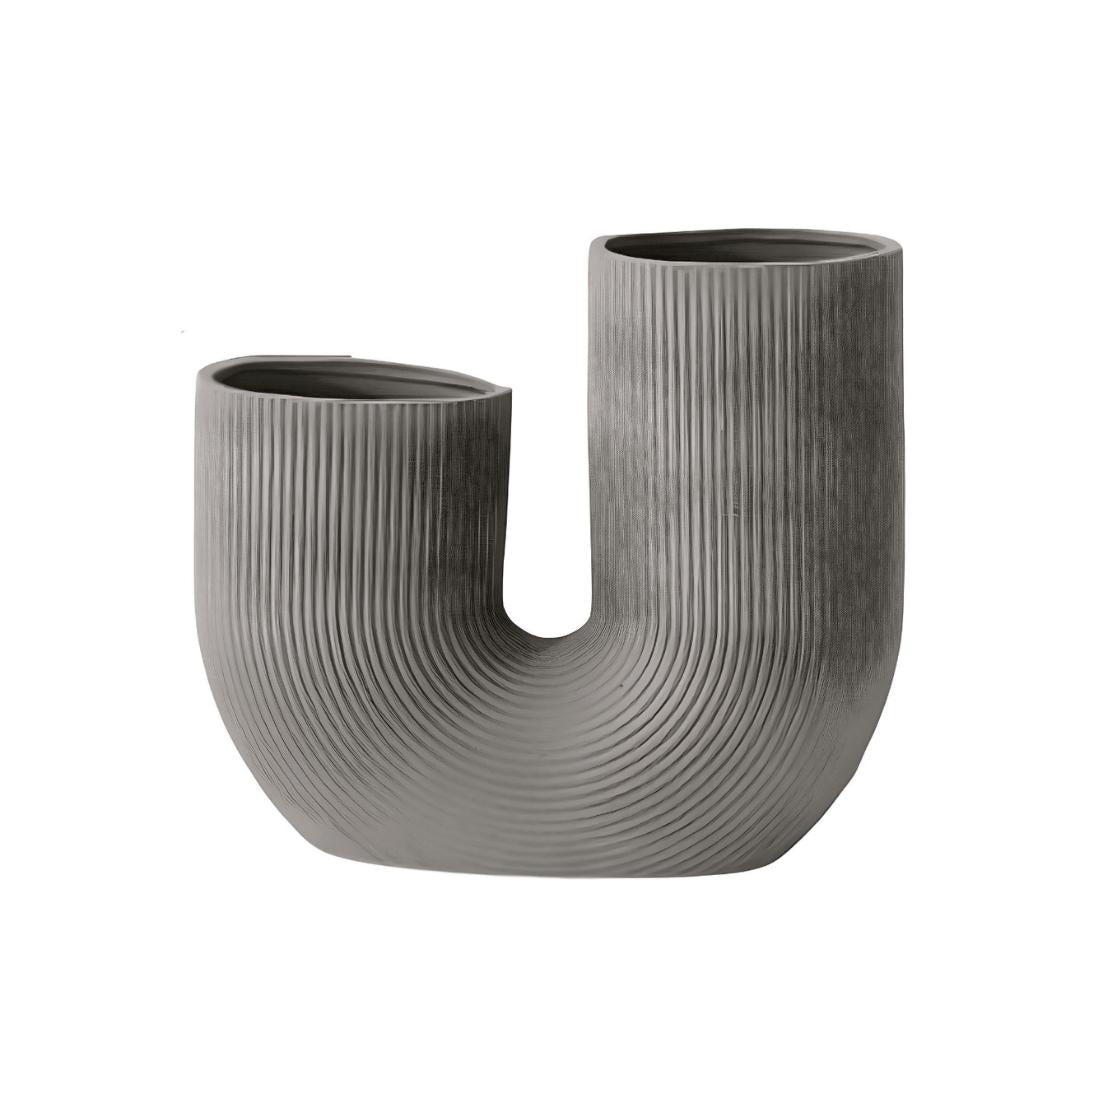 Grey, ceramic U shape vase